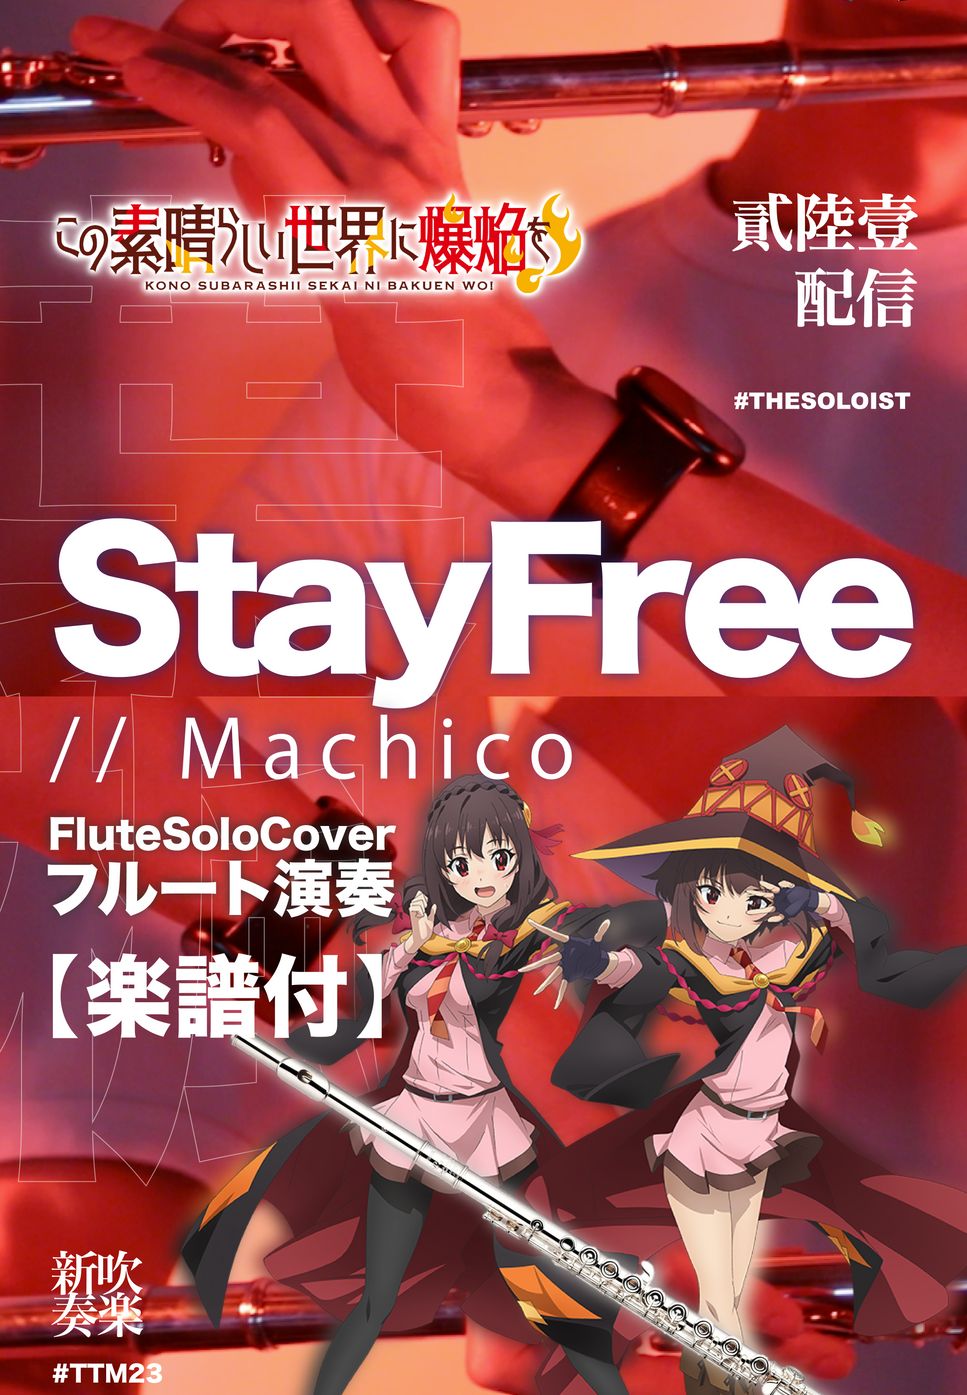 Machico - Stay Free (C/ Bb/ F/ Eb Solo Sheet Music) by FungYip